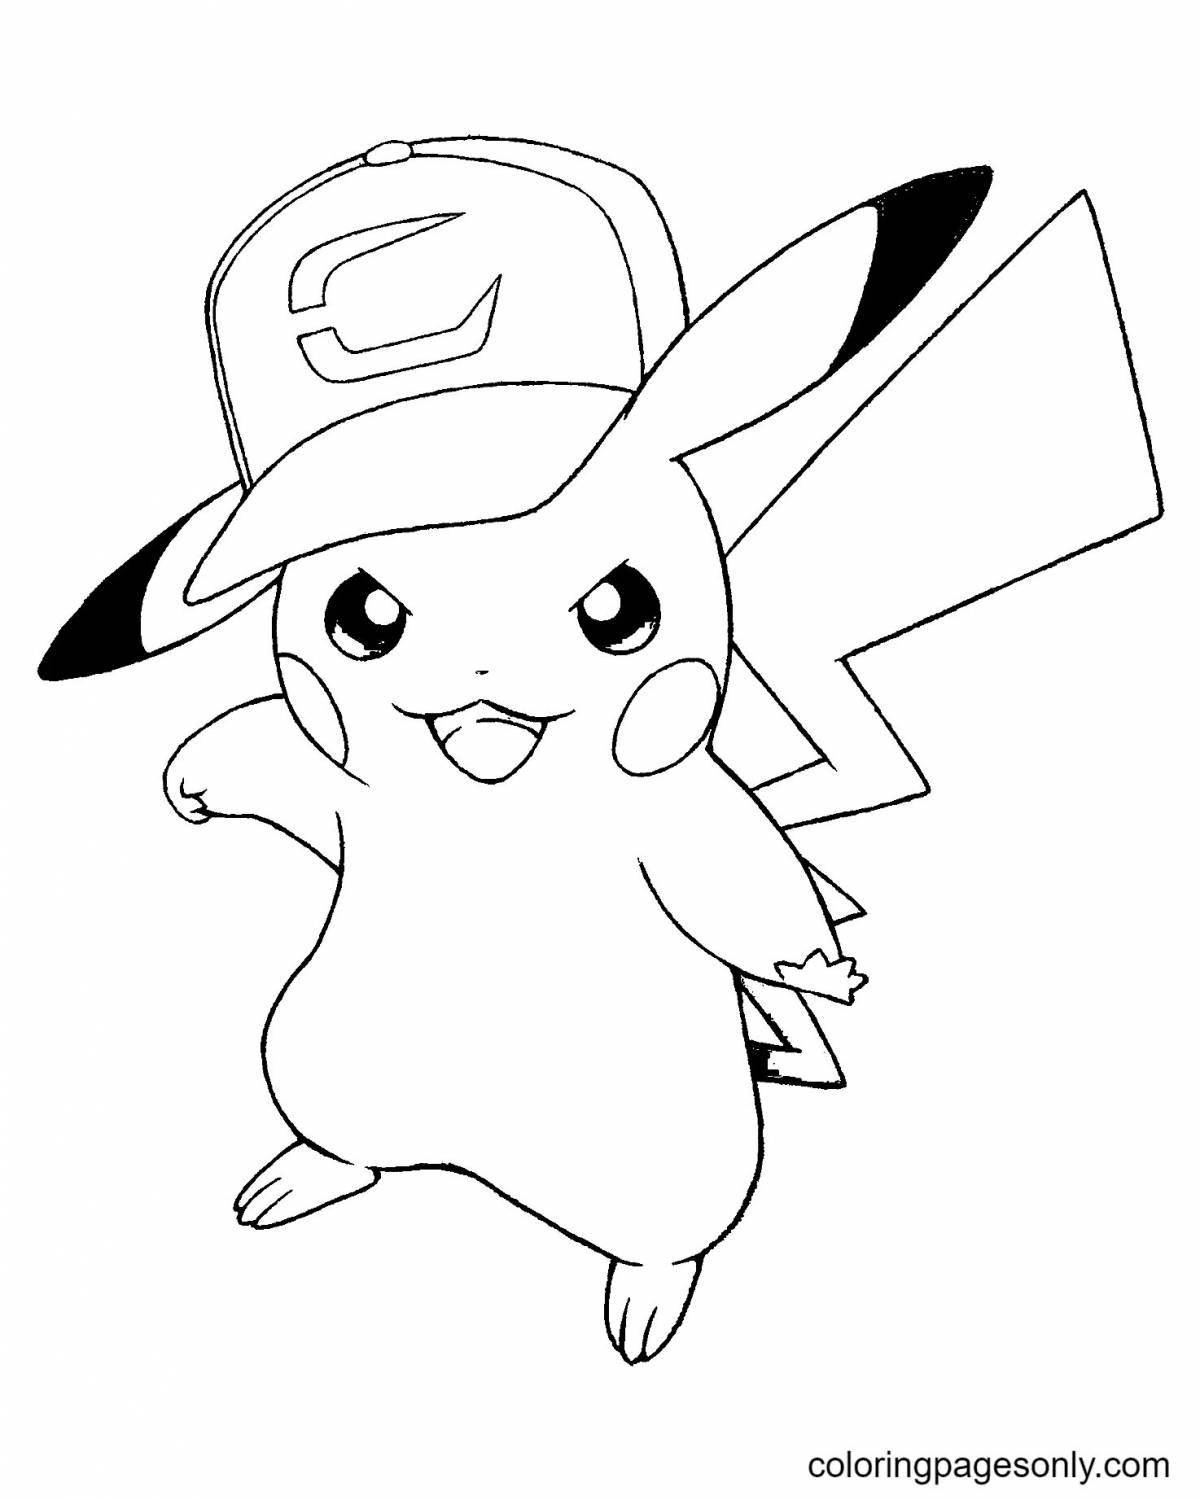 Nice coloring of Pikachu in a cap